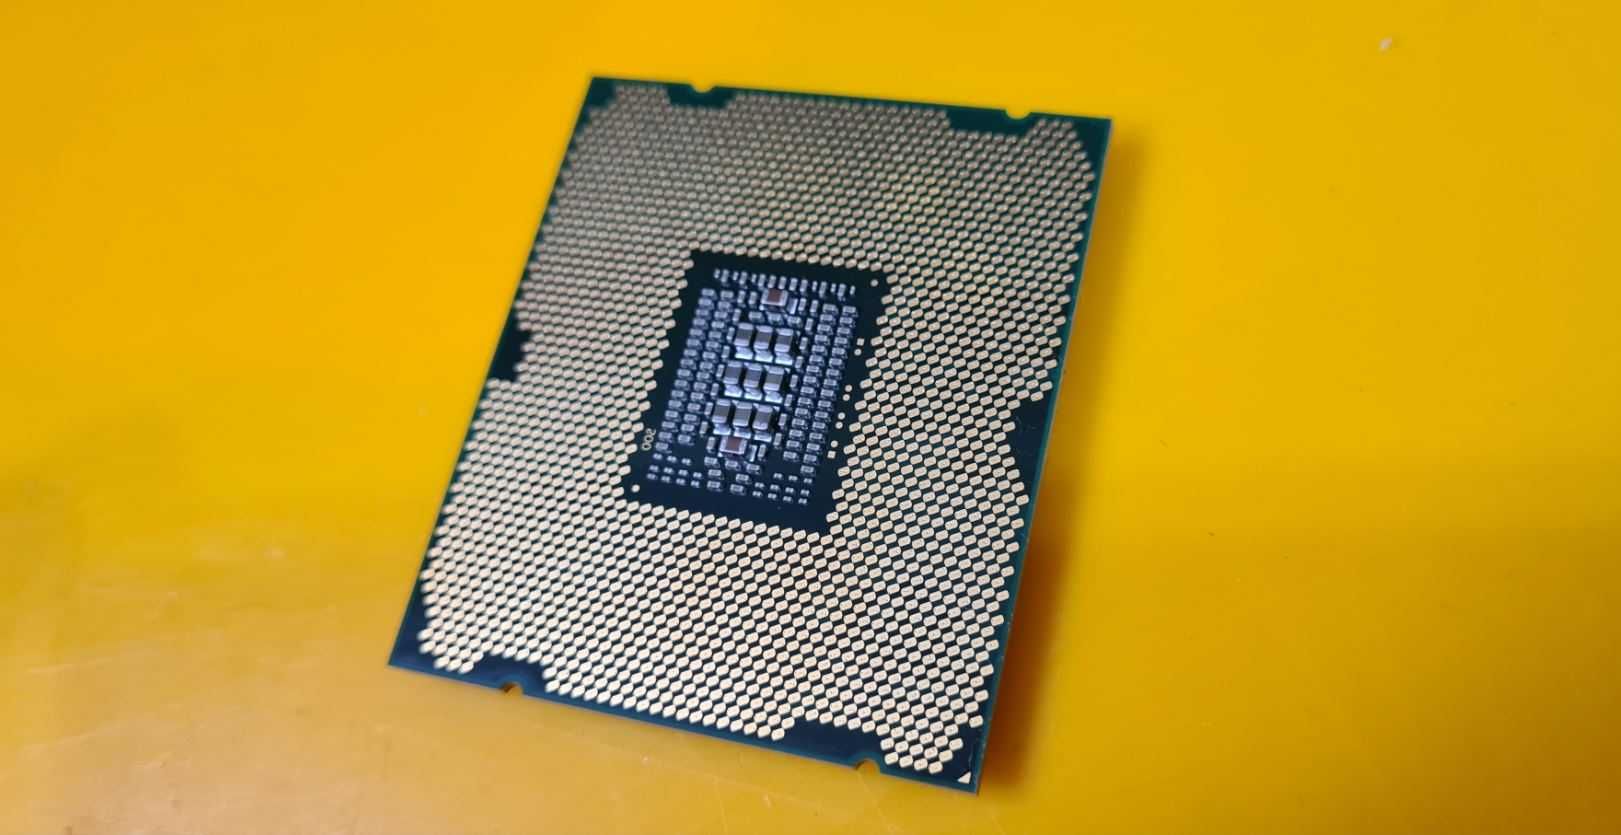 Procesor Xeon E5-2630 6 nuclee 2.30Ghz Turbo 2,80Ghz 15MB, LGA 2011